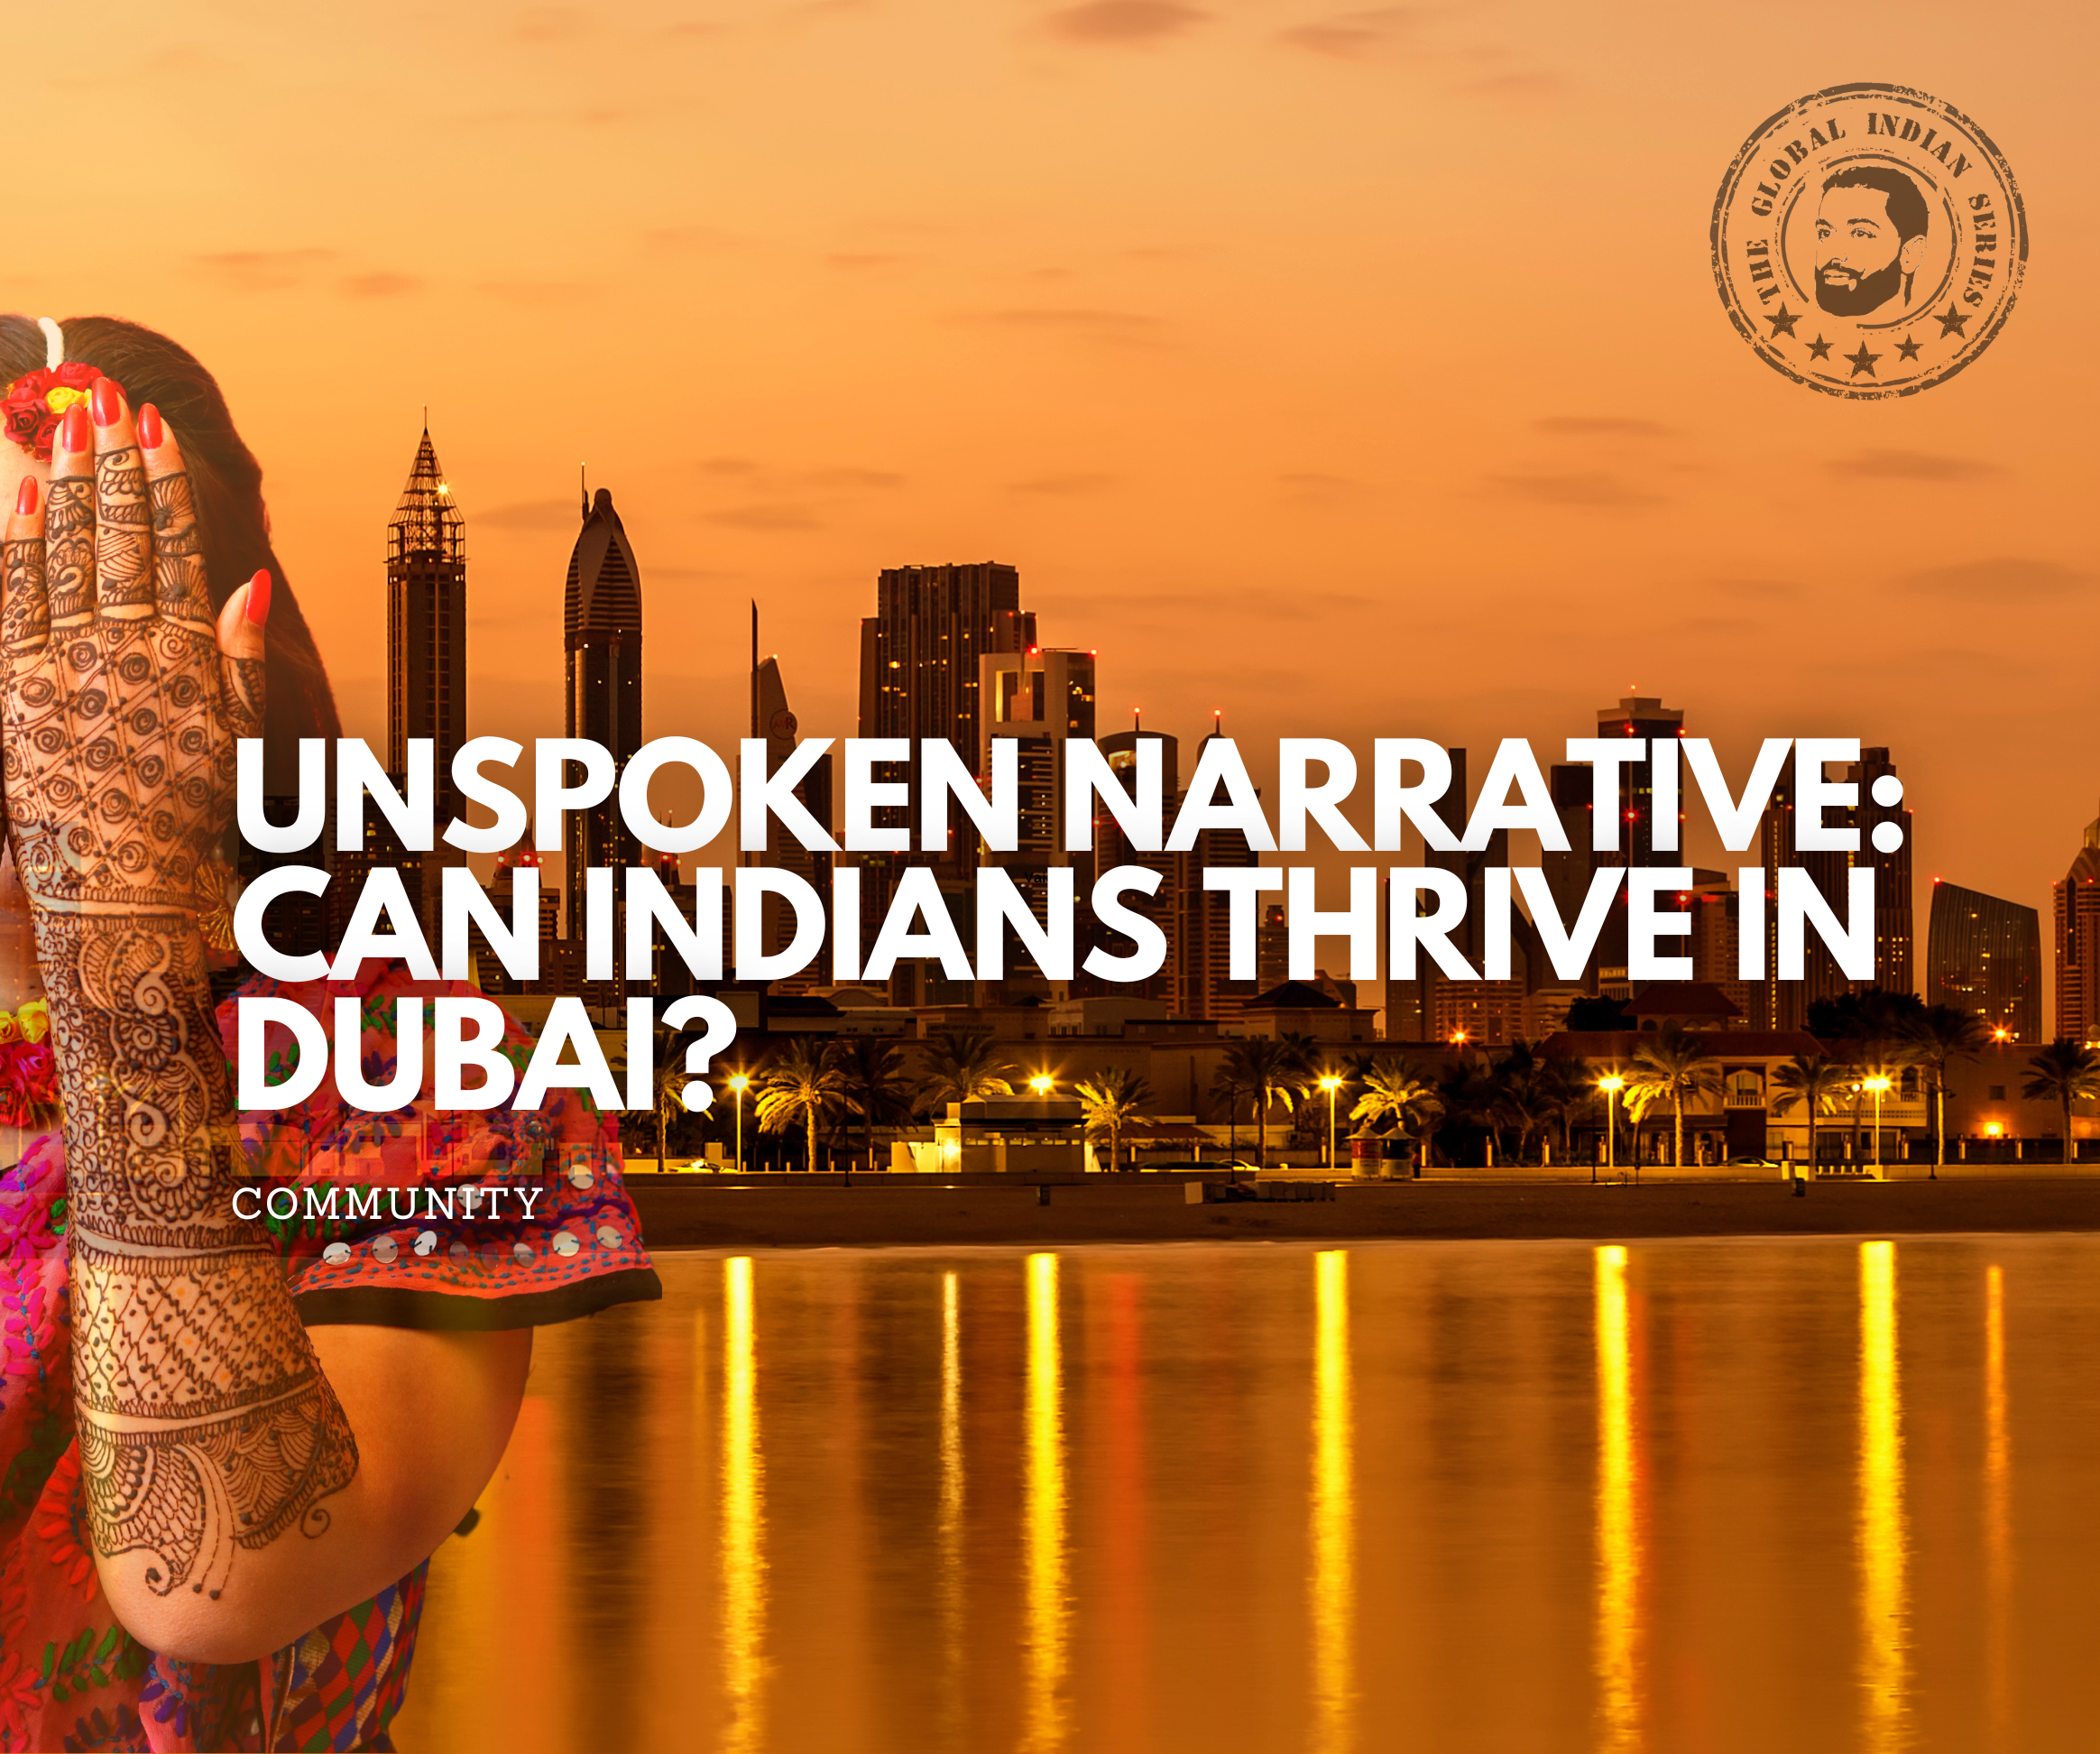 UNSPOKEM NARRATIVE: CAN INDIANDIAS THRIVE IN DUBAI?